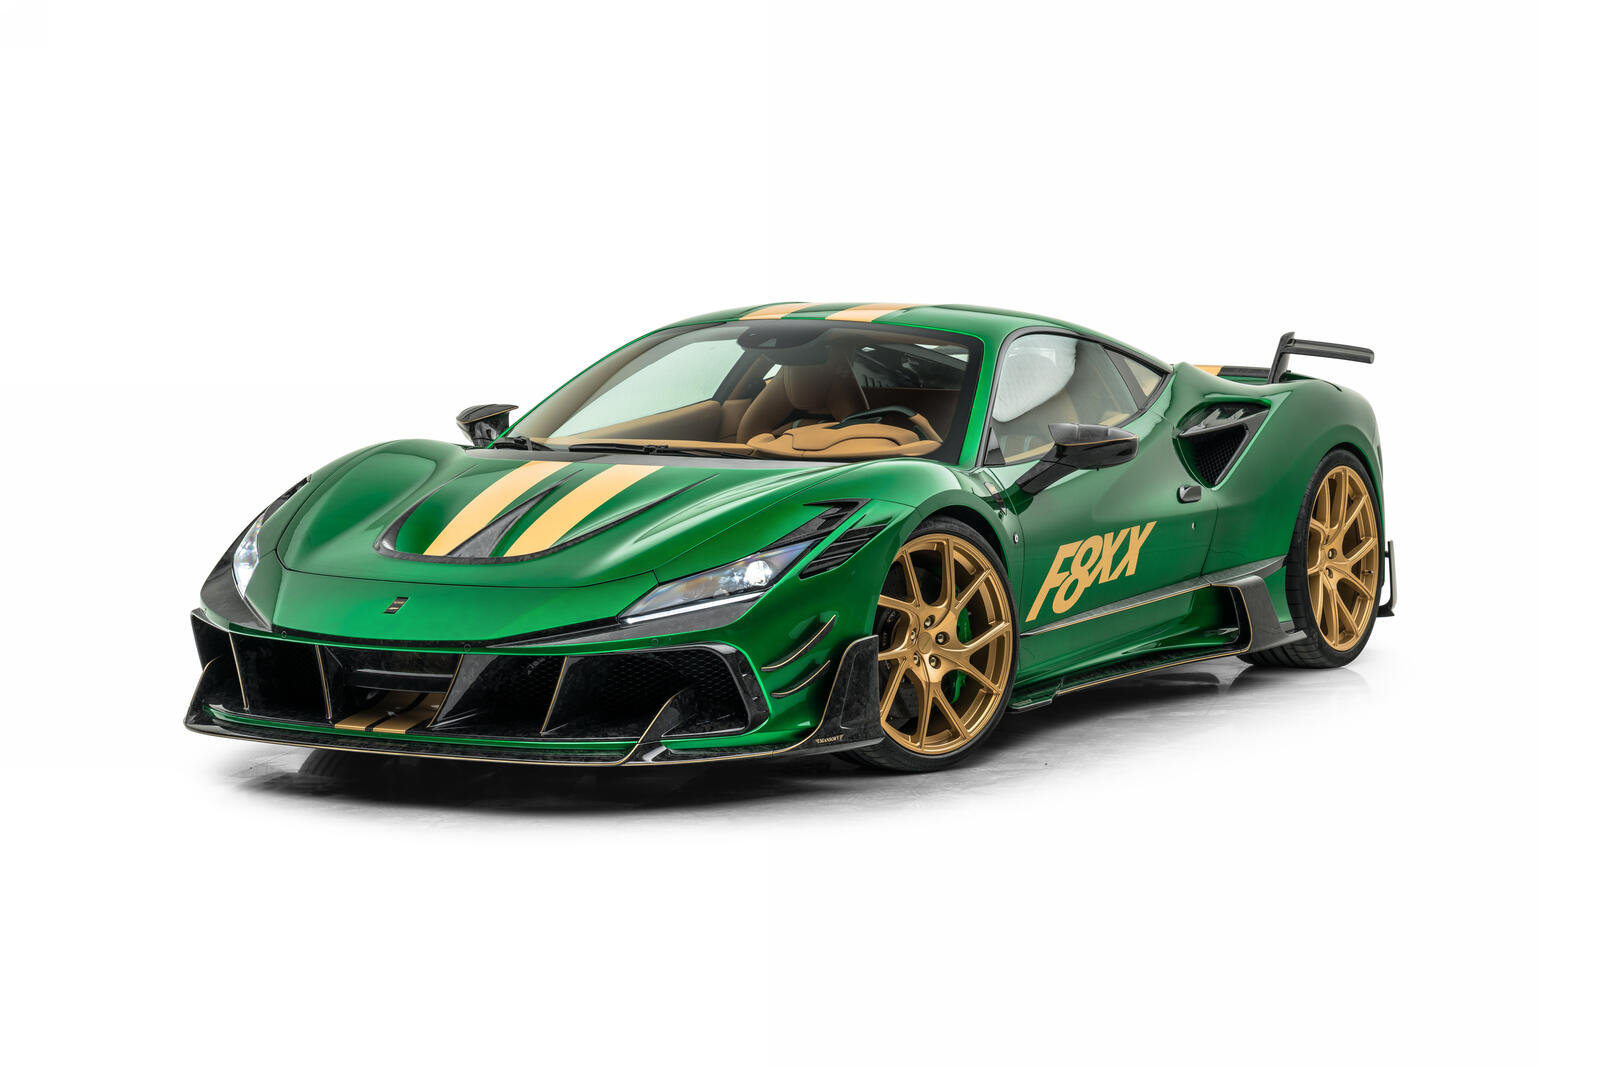 Free photo Green Ferrari with gold rims